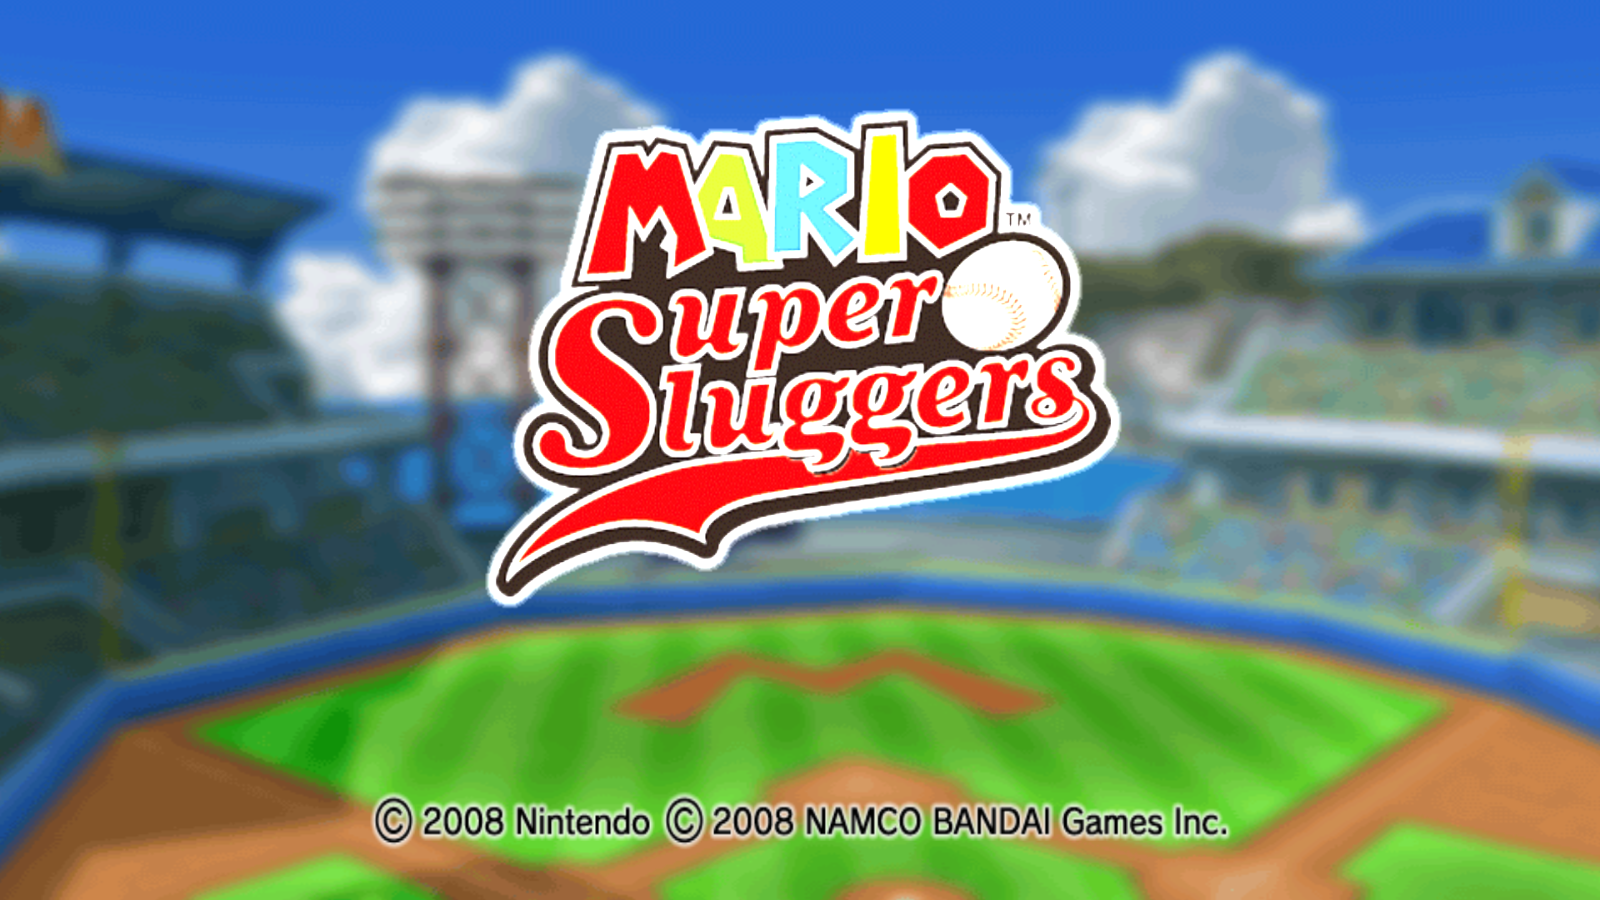 High Resolution Wallpaper | Mario Super Sluggers 1600x900 px